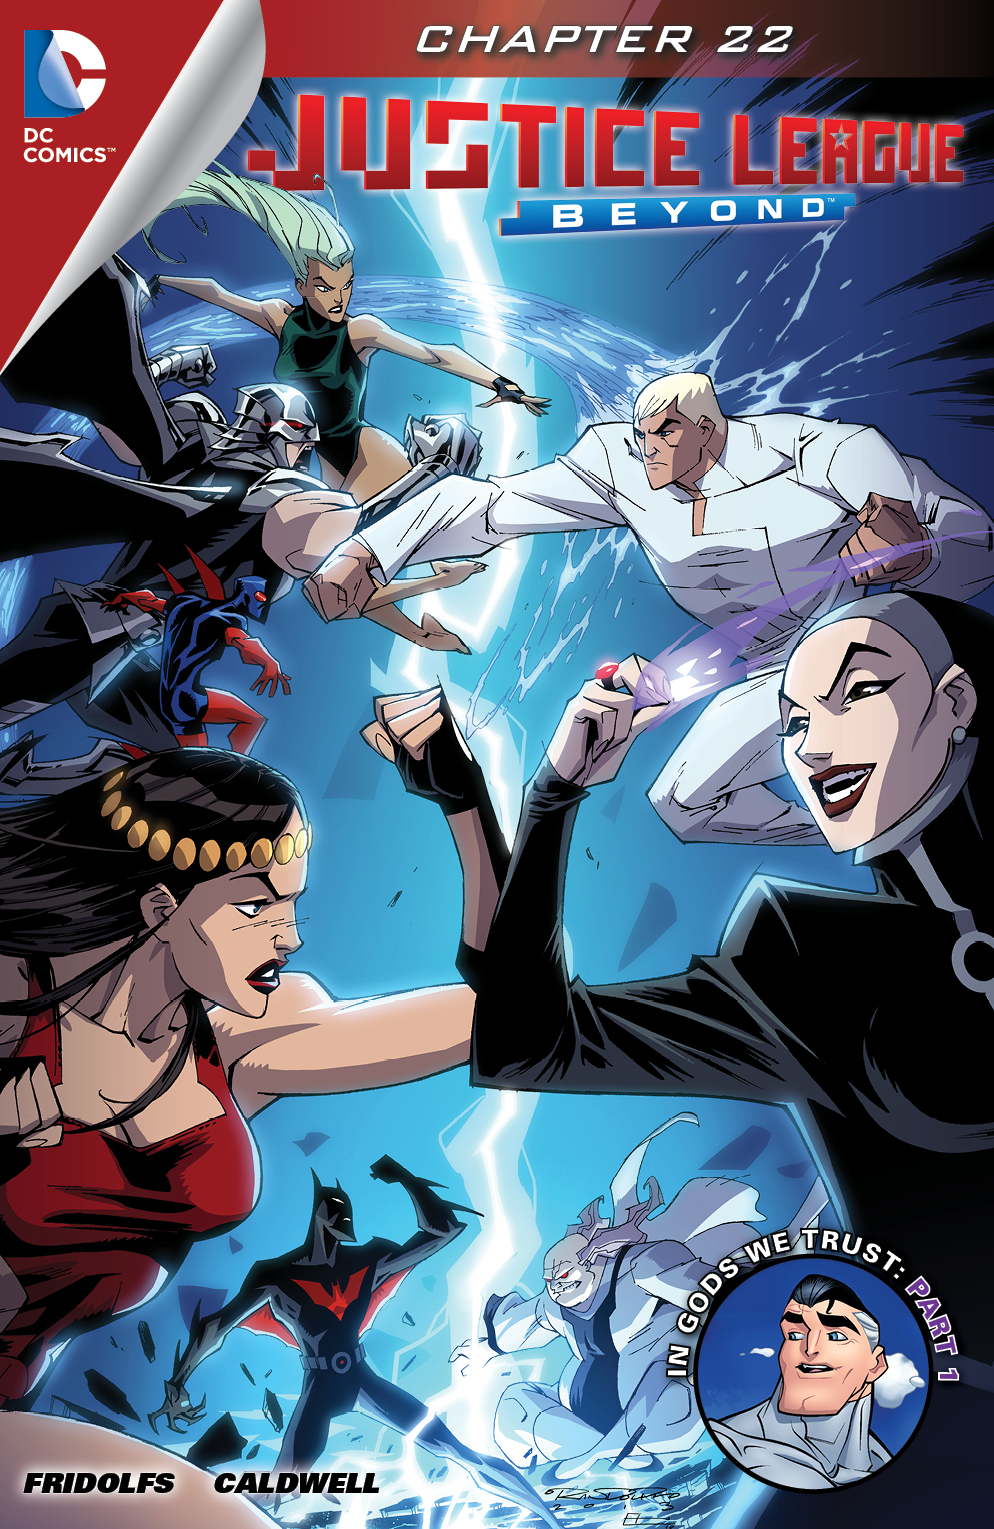 Justice League Beyond #22 preview images